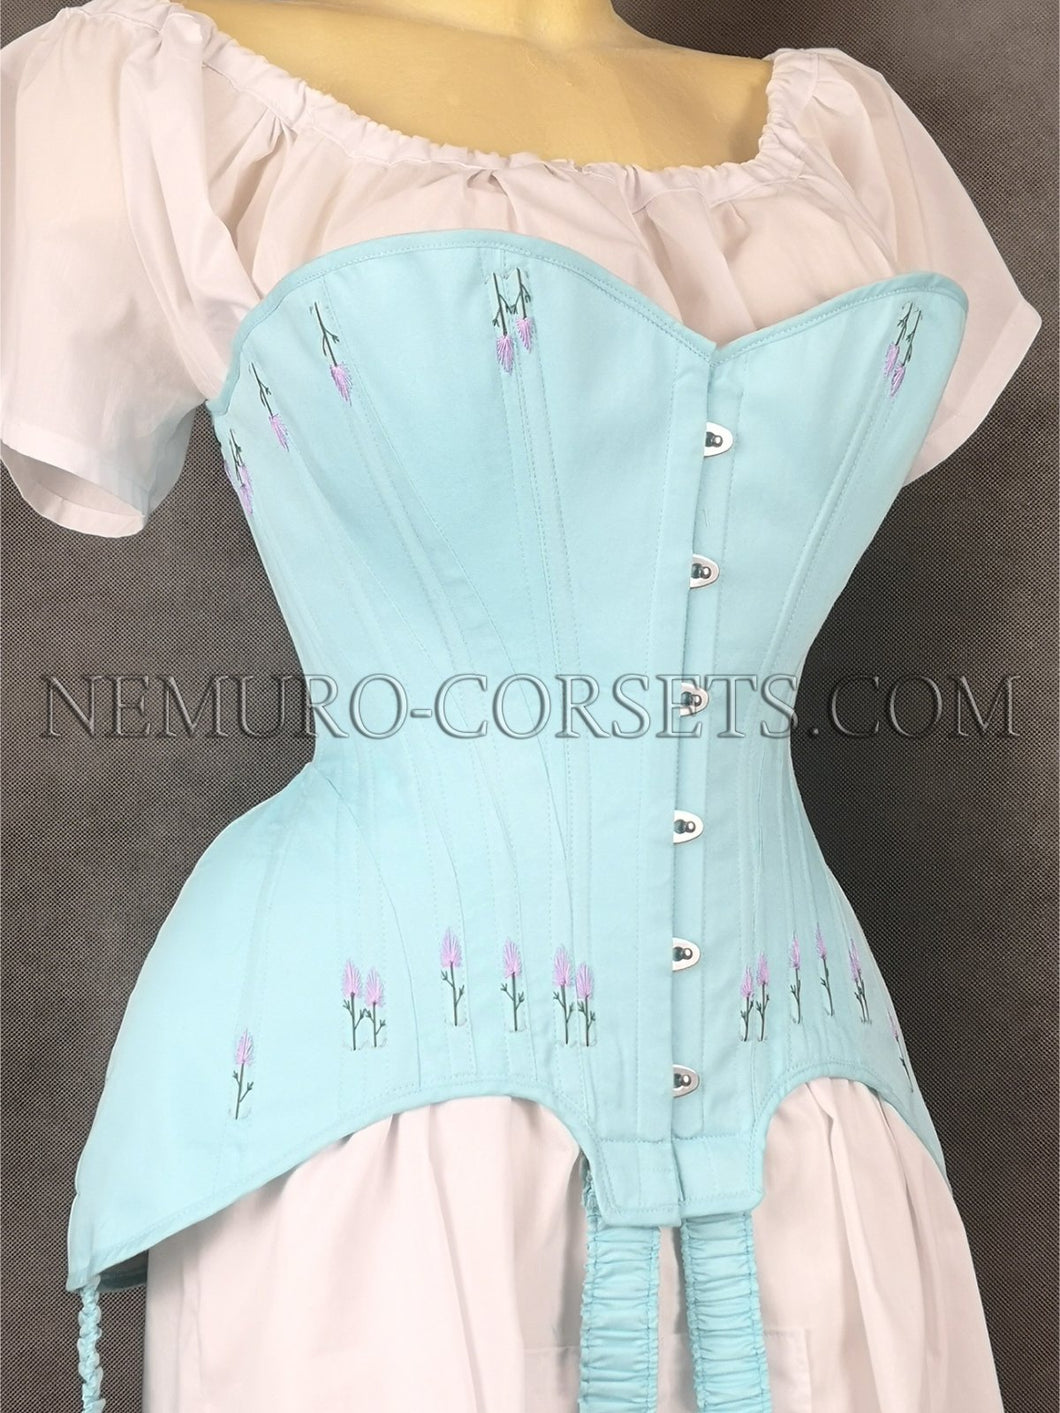 Edwardian S-bend corset 1900s